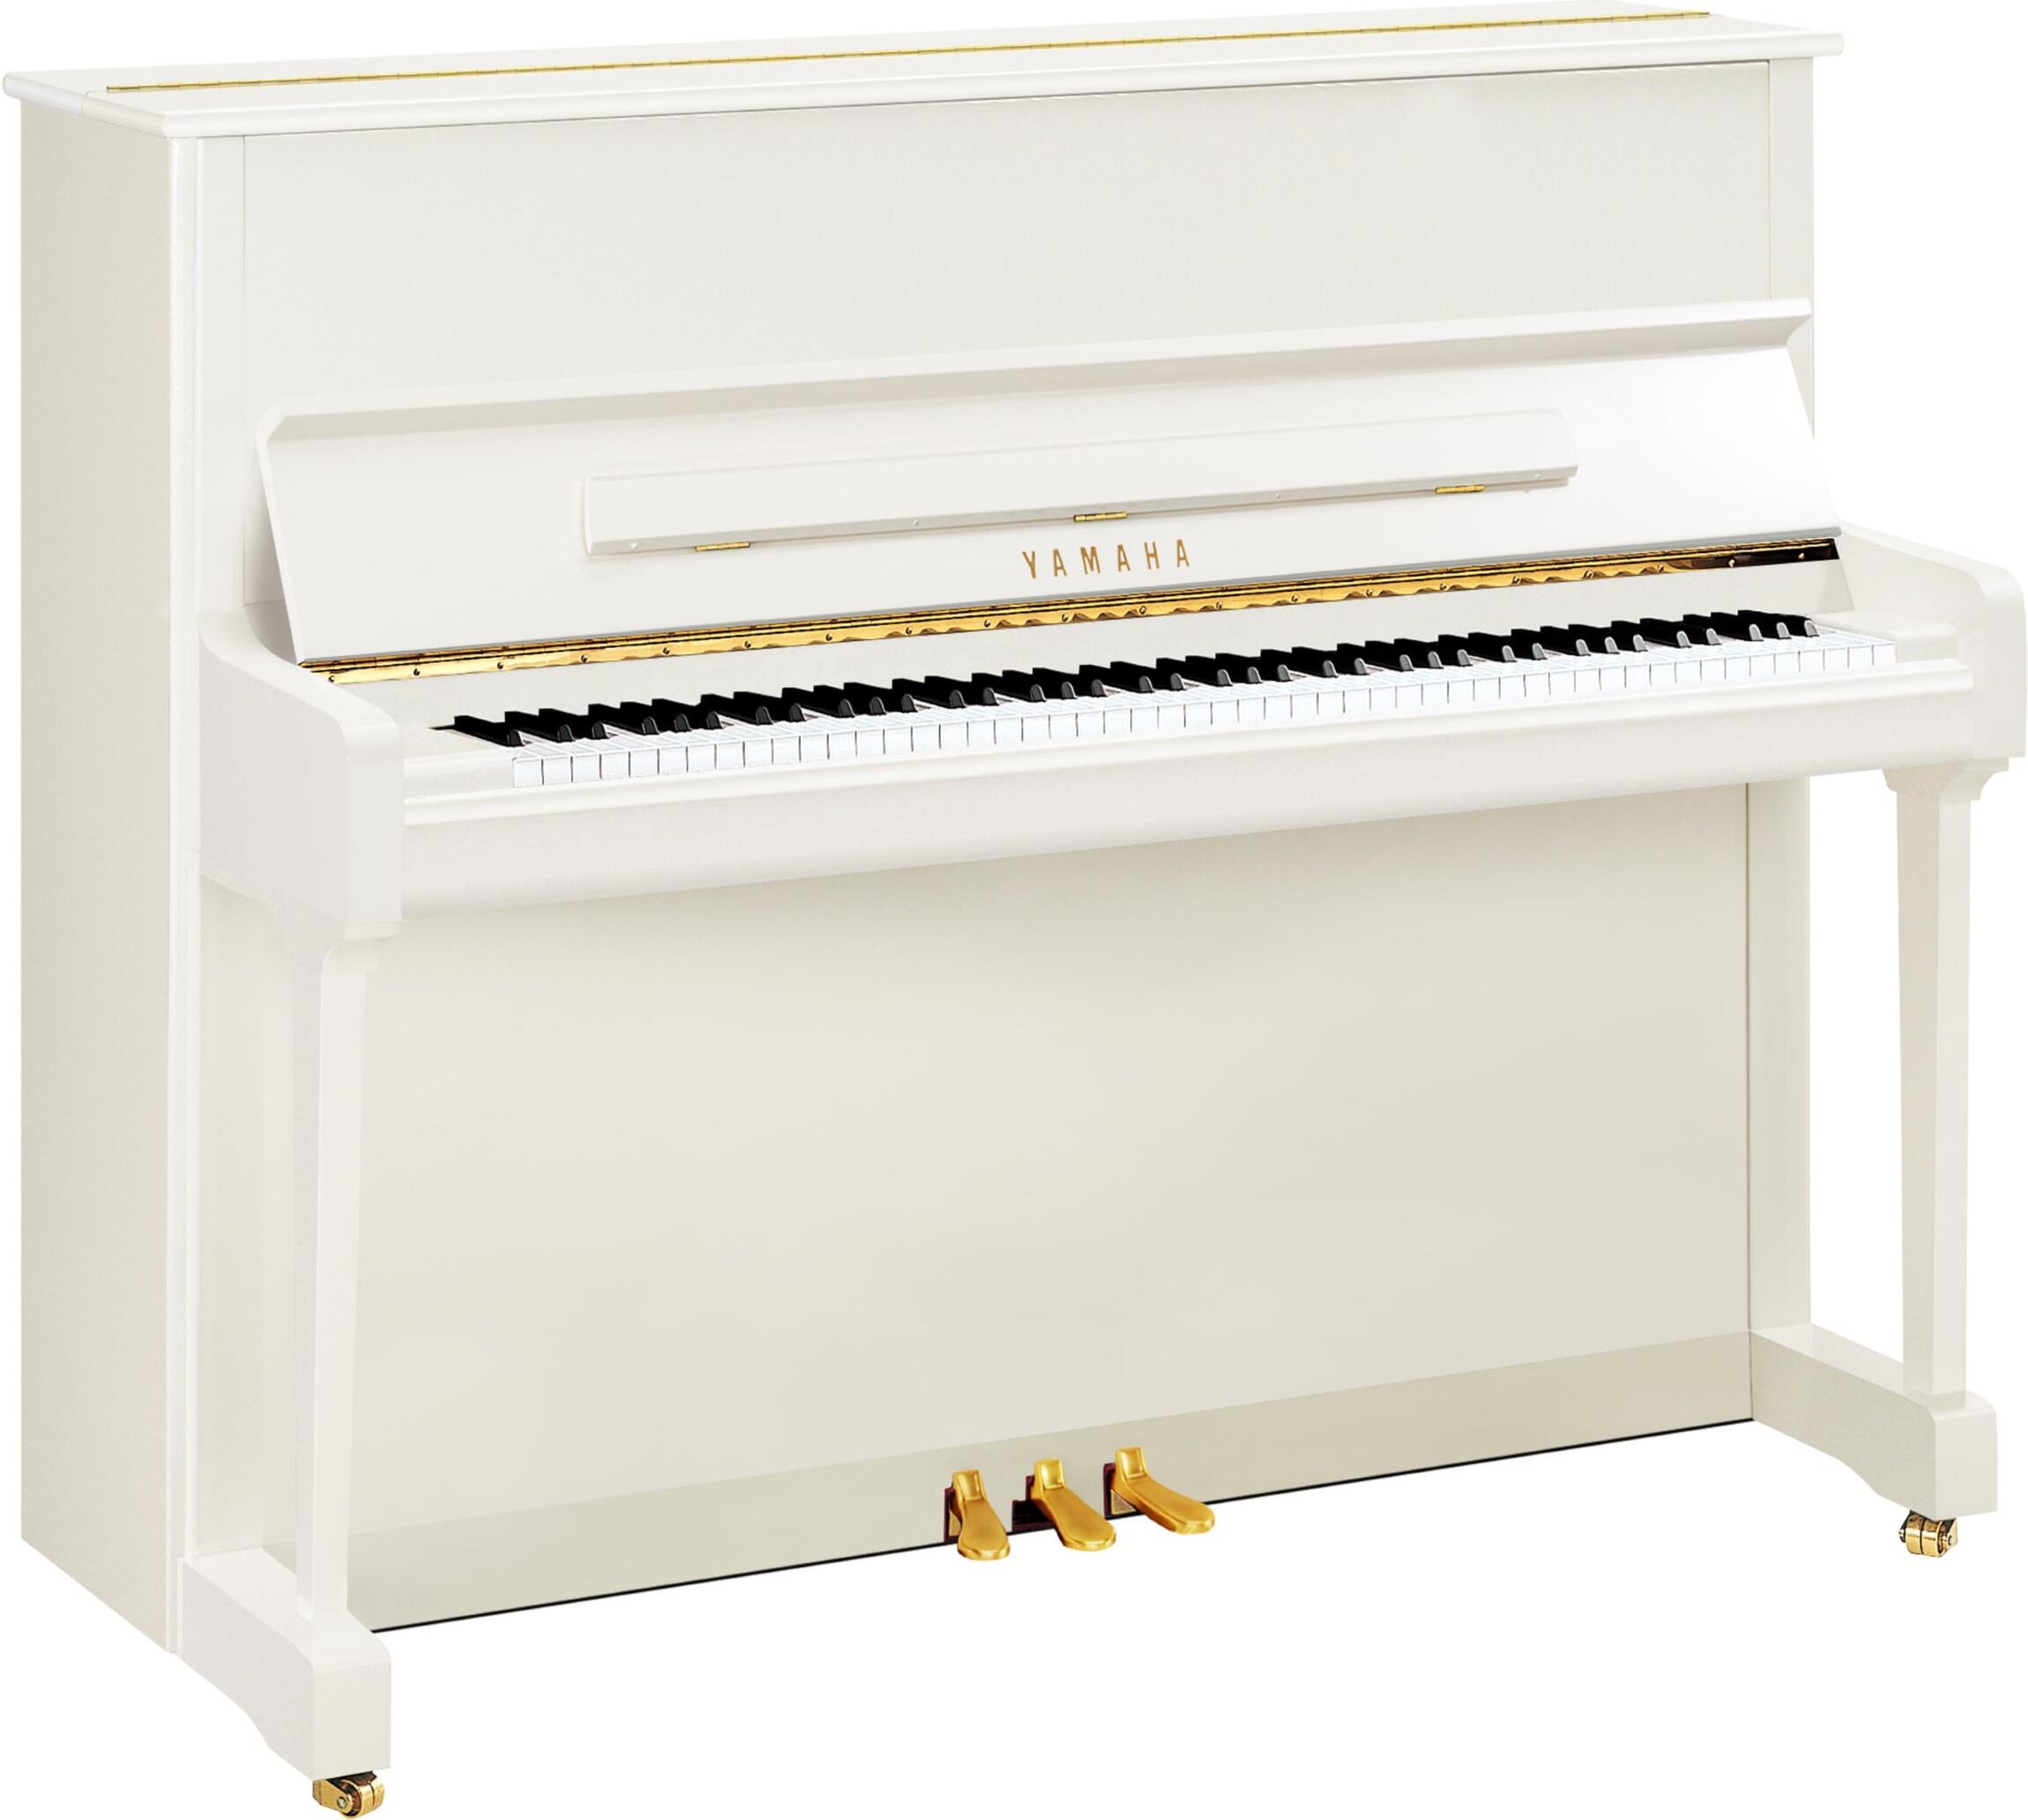 Yamaha Pianos Acoustic P121 PWH Blanc poli-brillant 121 cm : photo 1